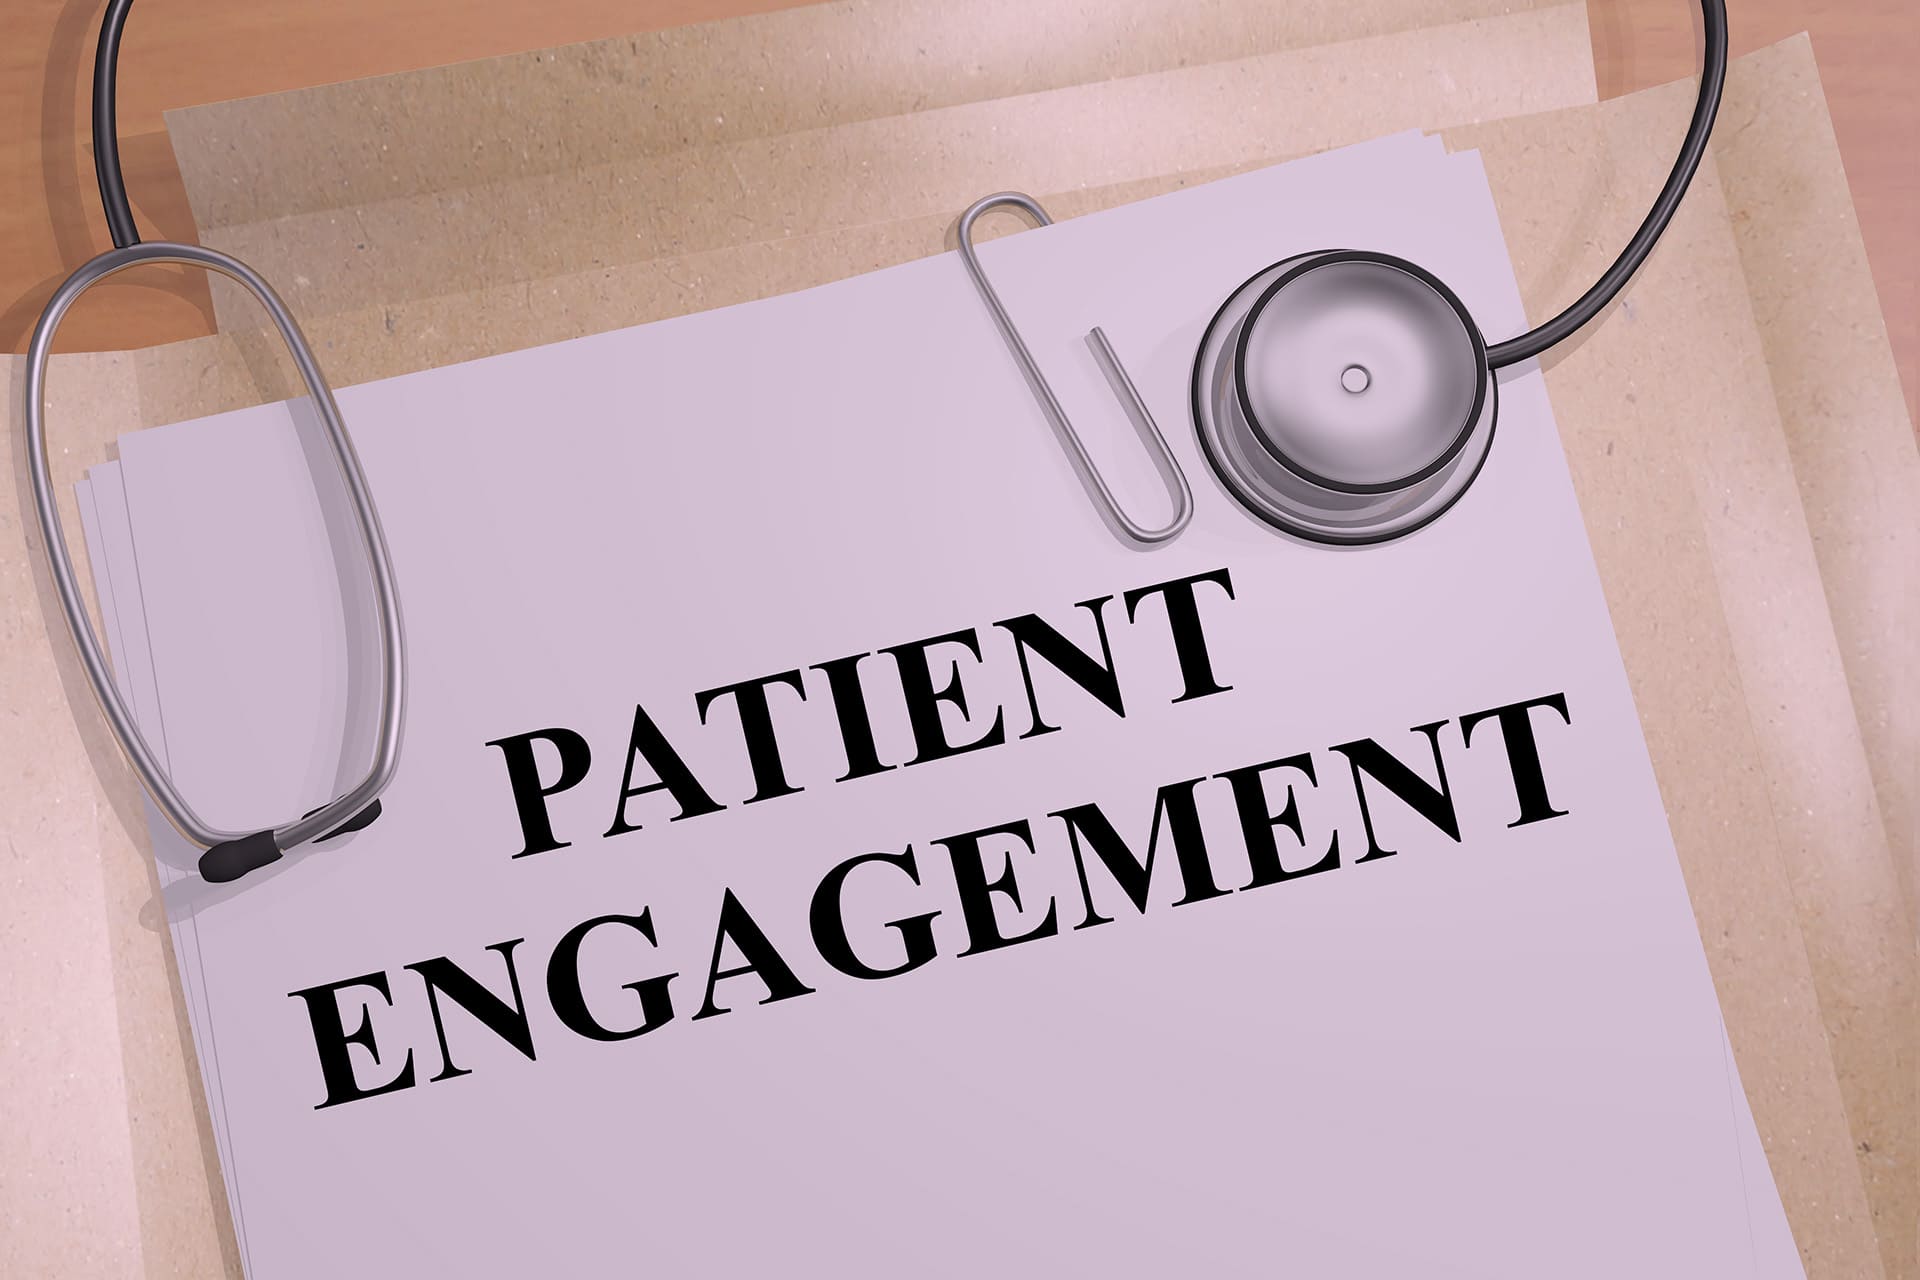 3D illustration of "PATIENT ENGAGEMENT" title on a medical document